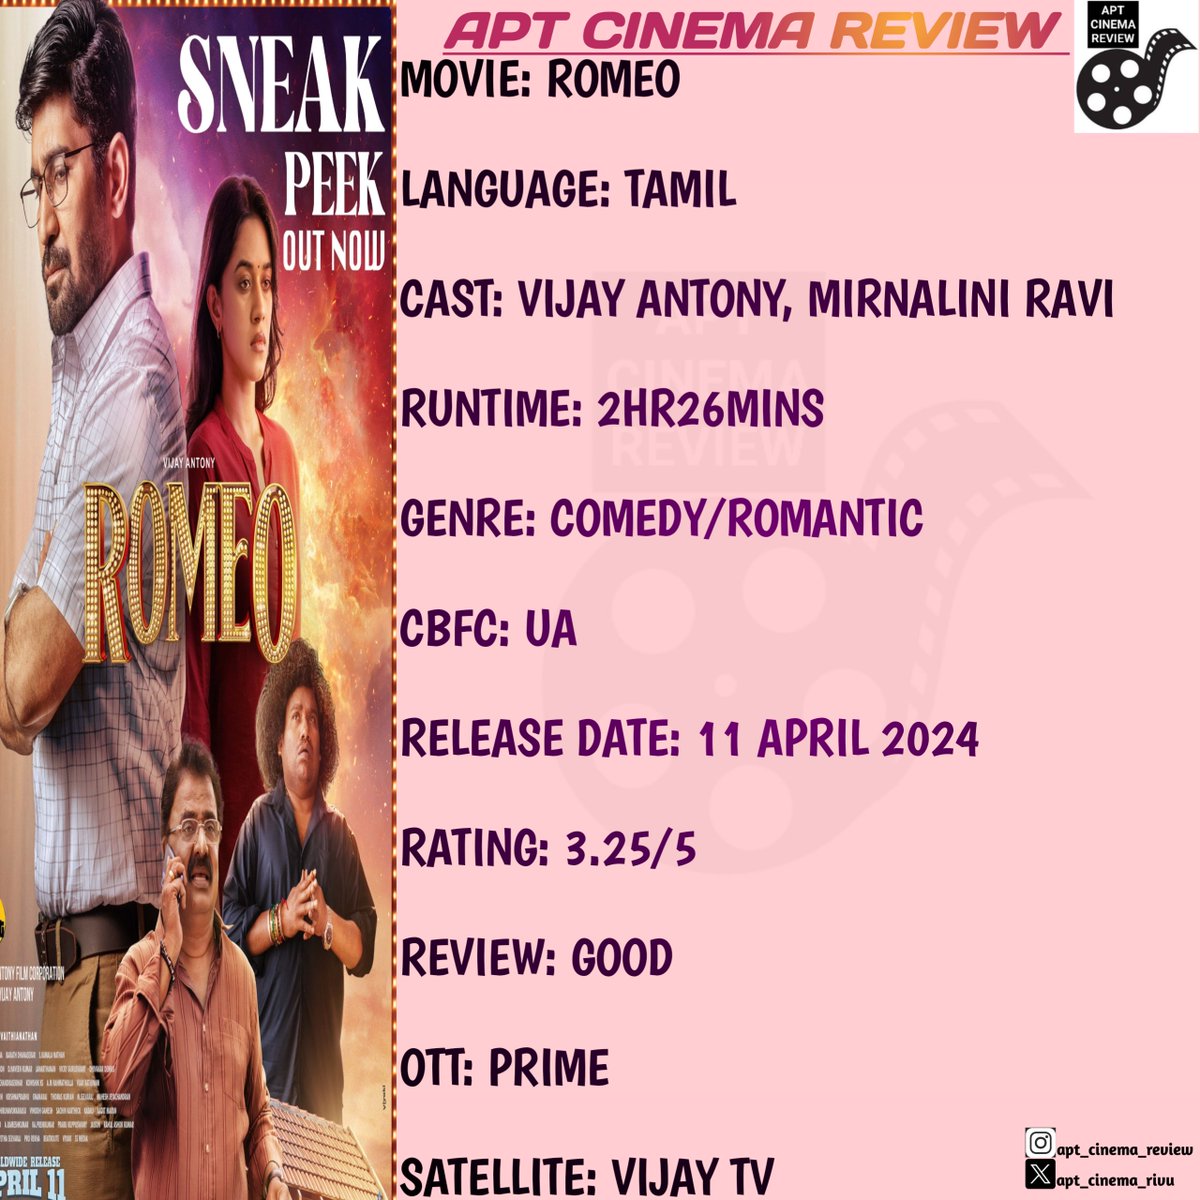 𝗔𝗣𝗧 𝗖𝗶𝗻𝗲𝗺𝗮 𝗥𝗲𝘃𝗶𝗲𝘄:

🎞️ #Romeo - 3.25/5
🗣️ Tamil
🌟 #VijayAntony #MirnaliniRavi 
💿 Prime
📡 Vijay TV 
📝 Good👍

Cast: Good
Story: Good
Screenplay: Okay 
Music&BGM: Okay
1st Half: Okay
2nd Half: Good 
Overall: Watchable👍

#RomeoReview #ரோமியோ #RomeoMovieReview